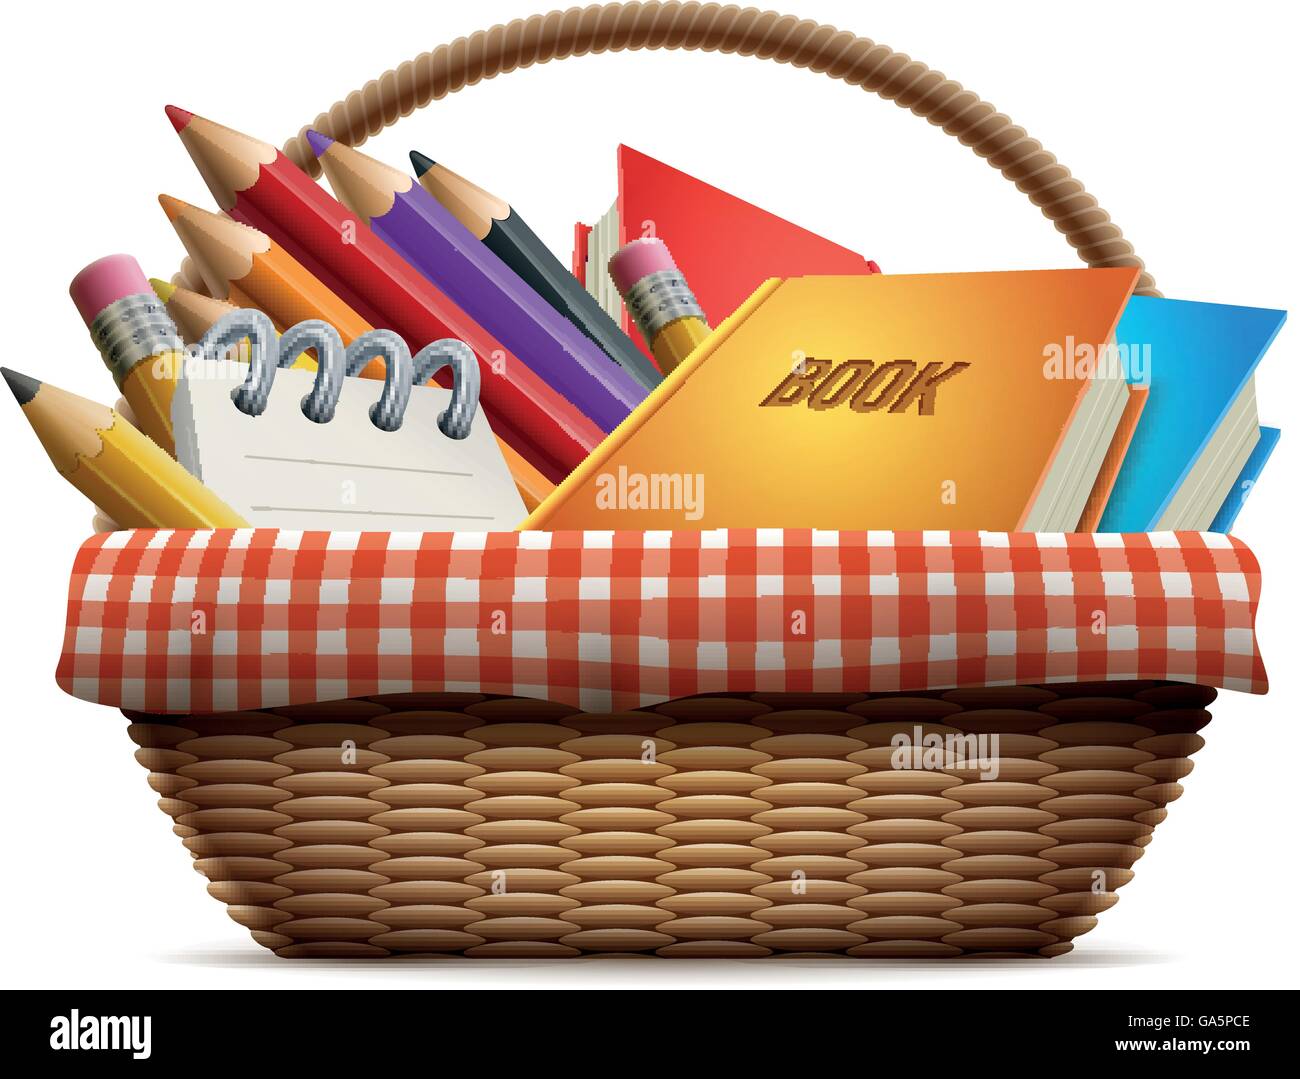 School supplies in wicker picnic basket. Detailed vector illustration. Stock Vector